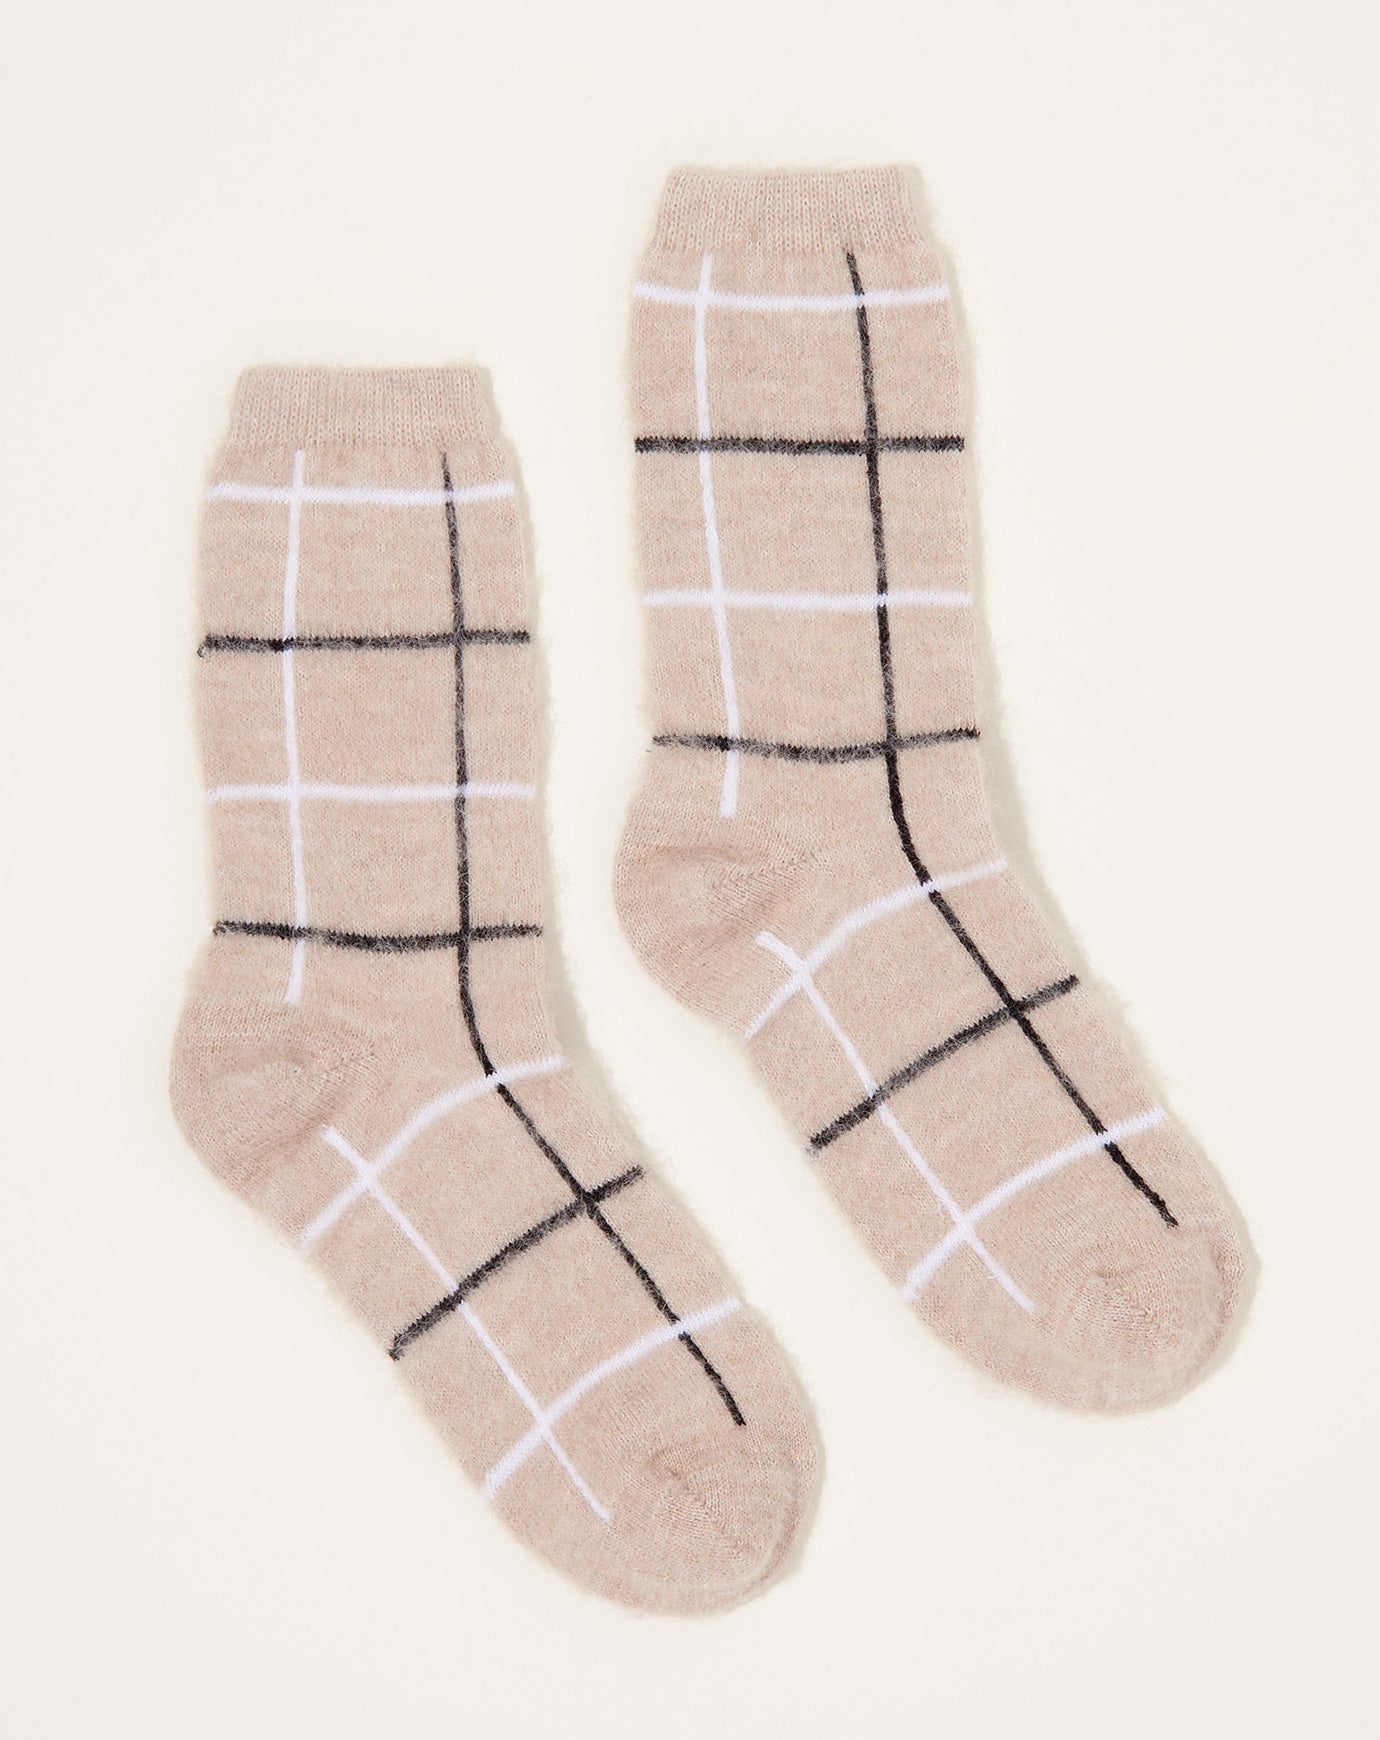 Exquisite J Brushed Mohair Tartan Socks in Oatmeal